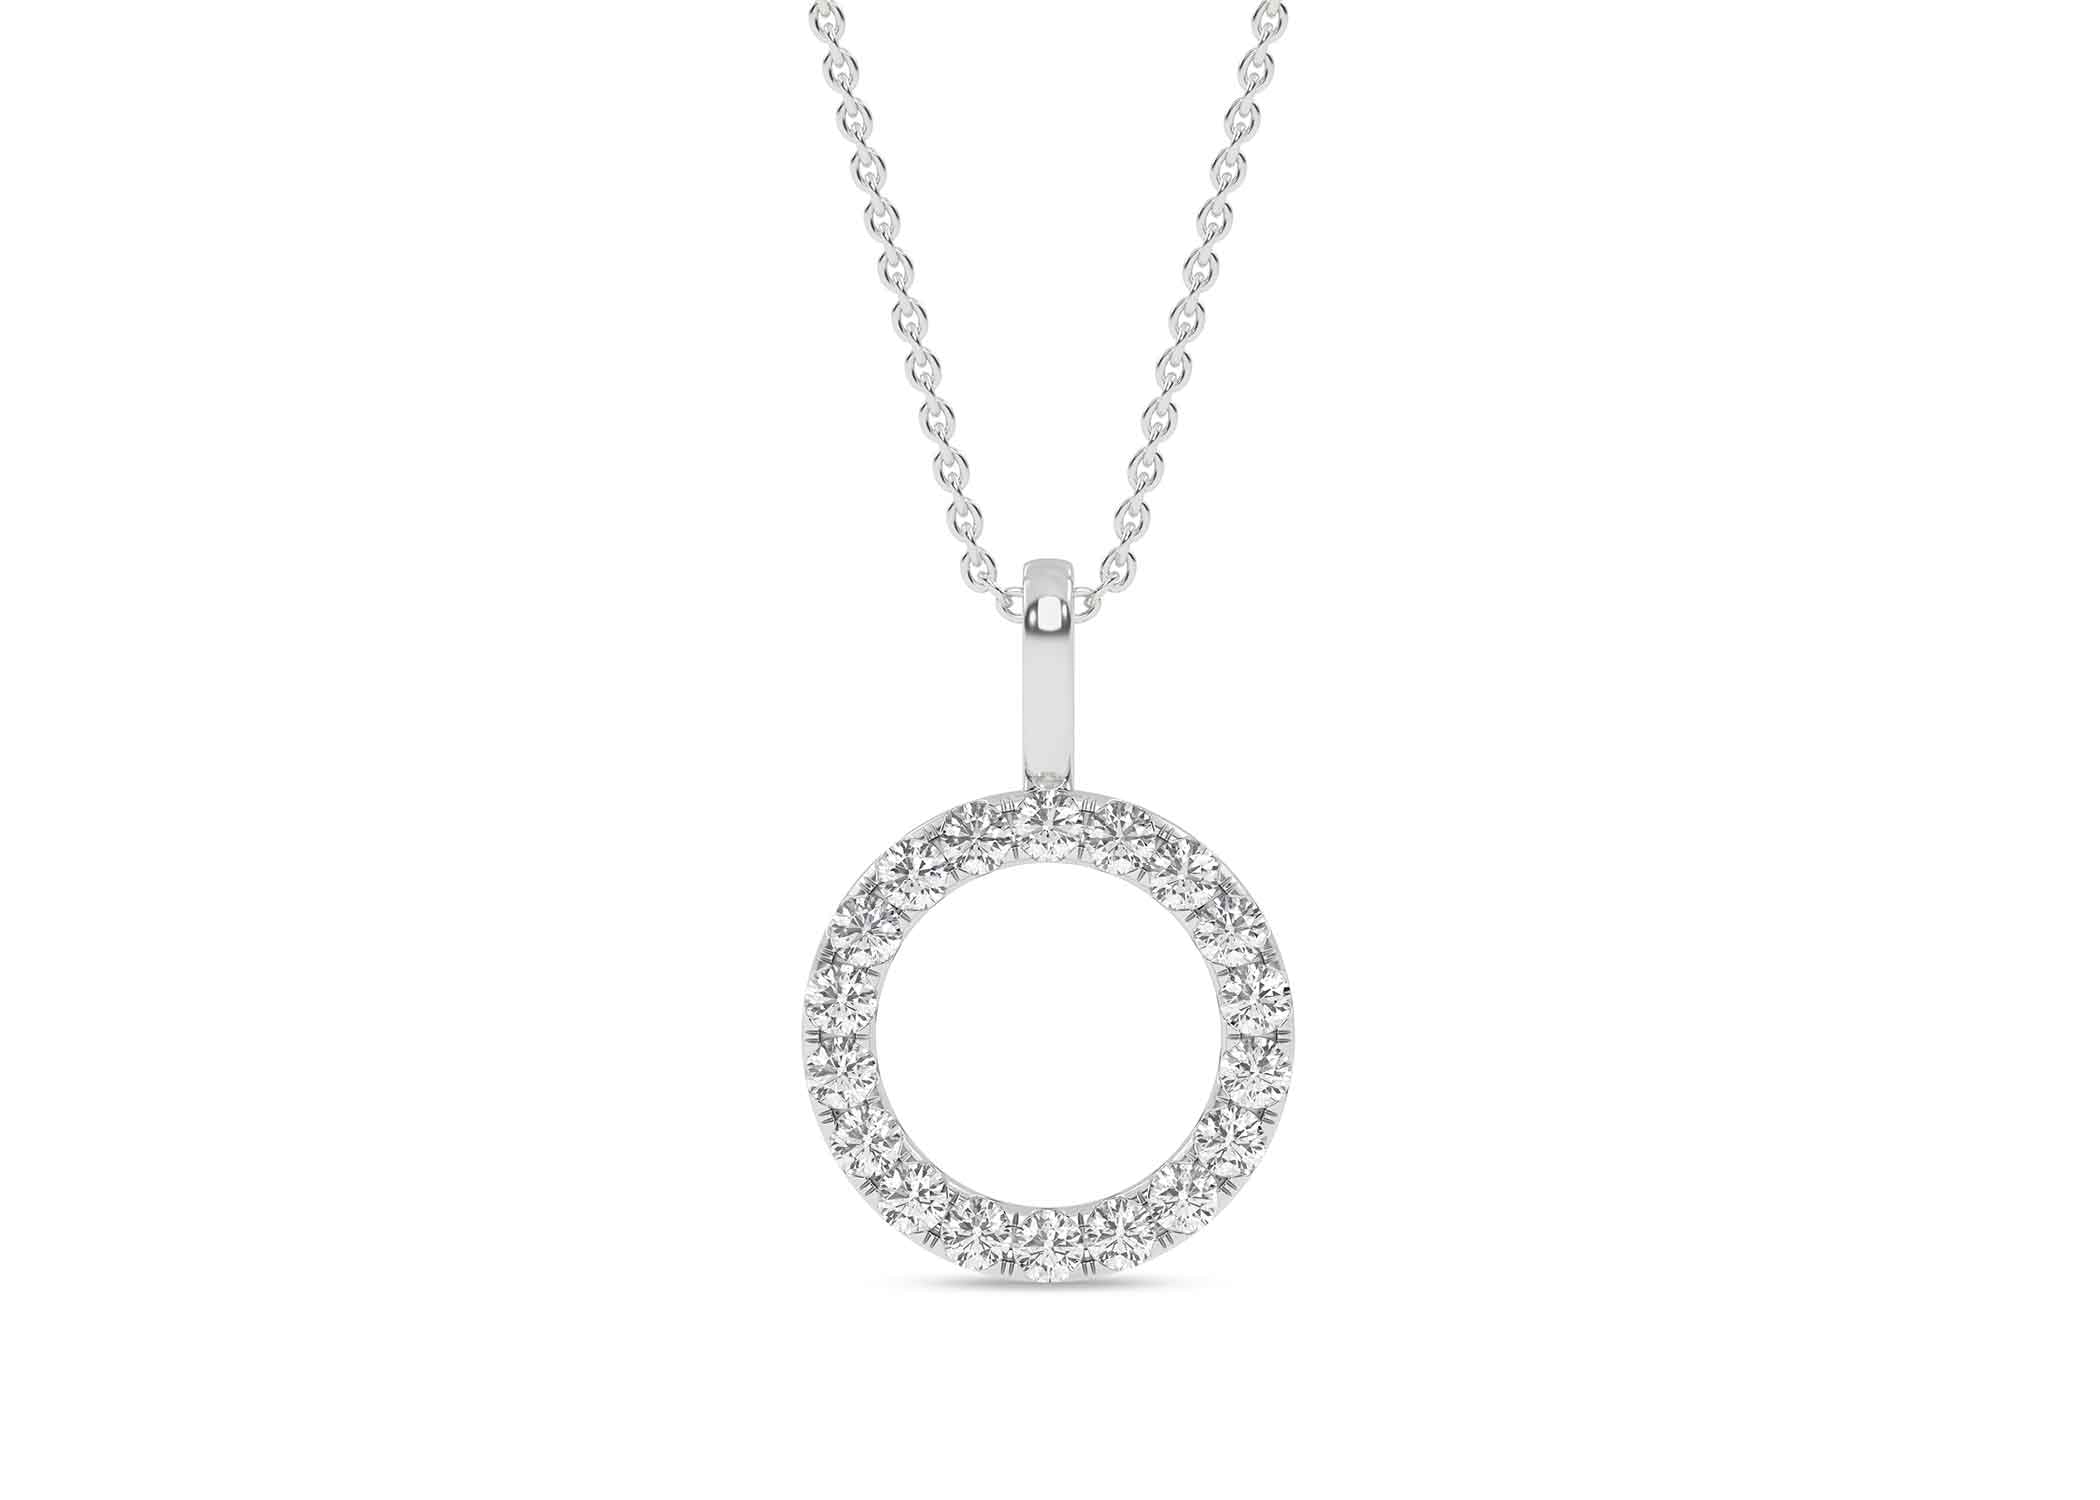 Circular Silhouette Drop Necklace - Necklace 